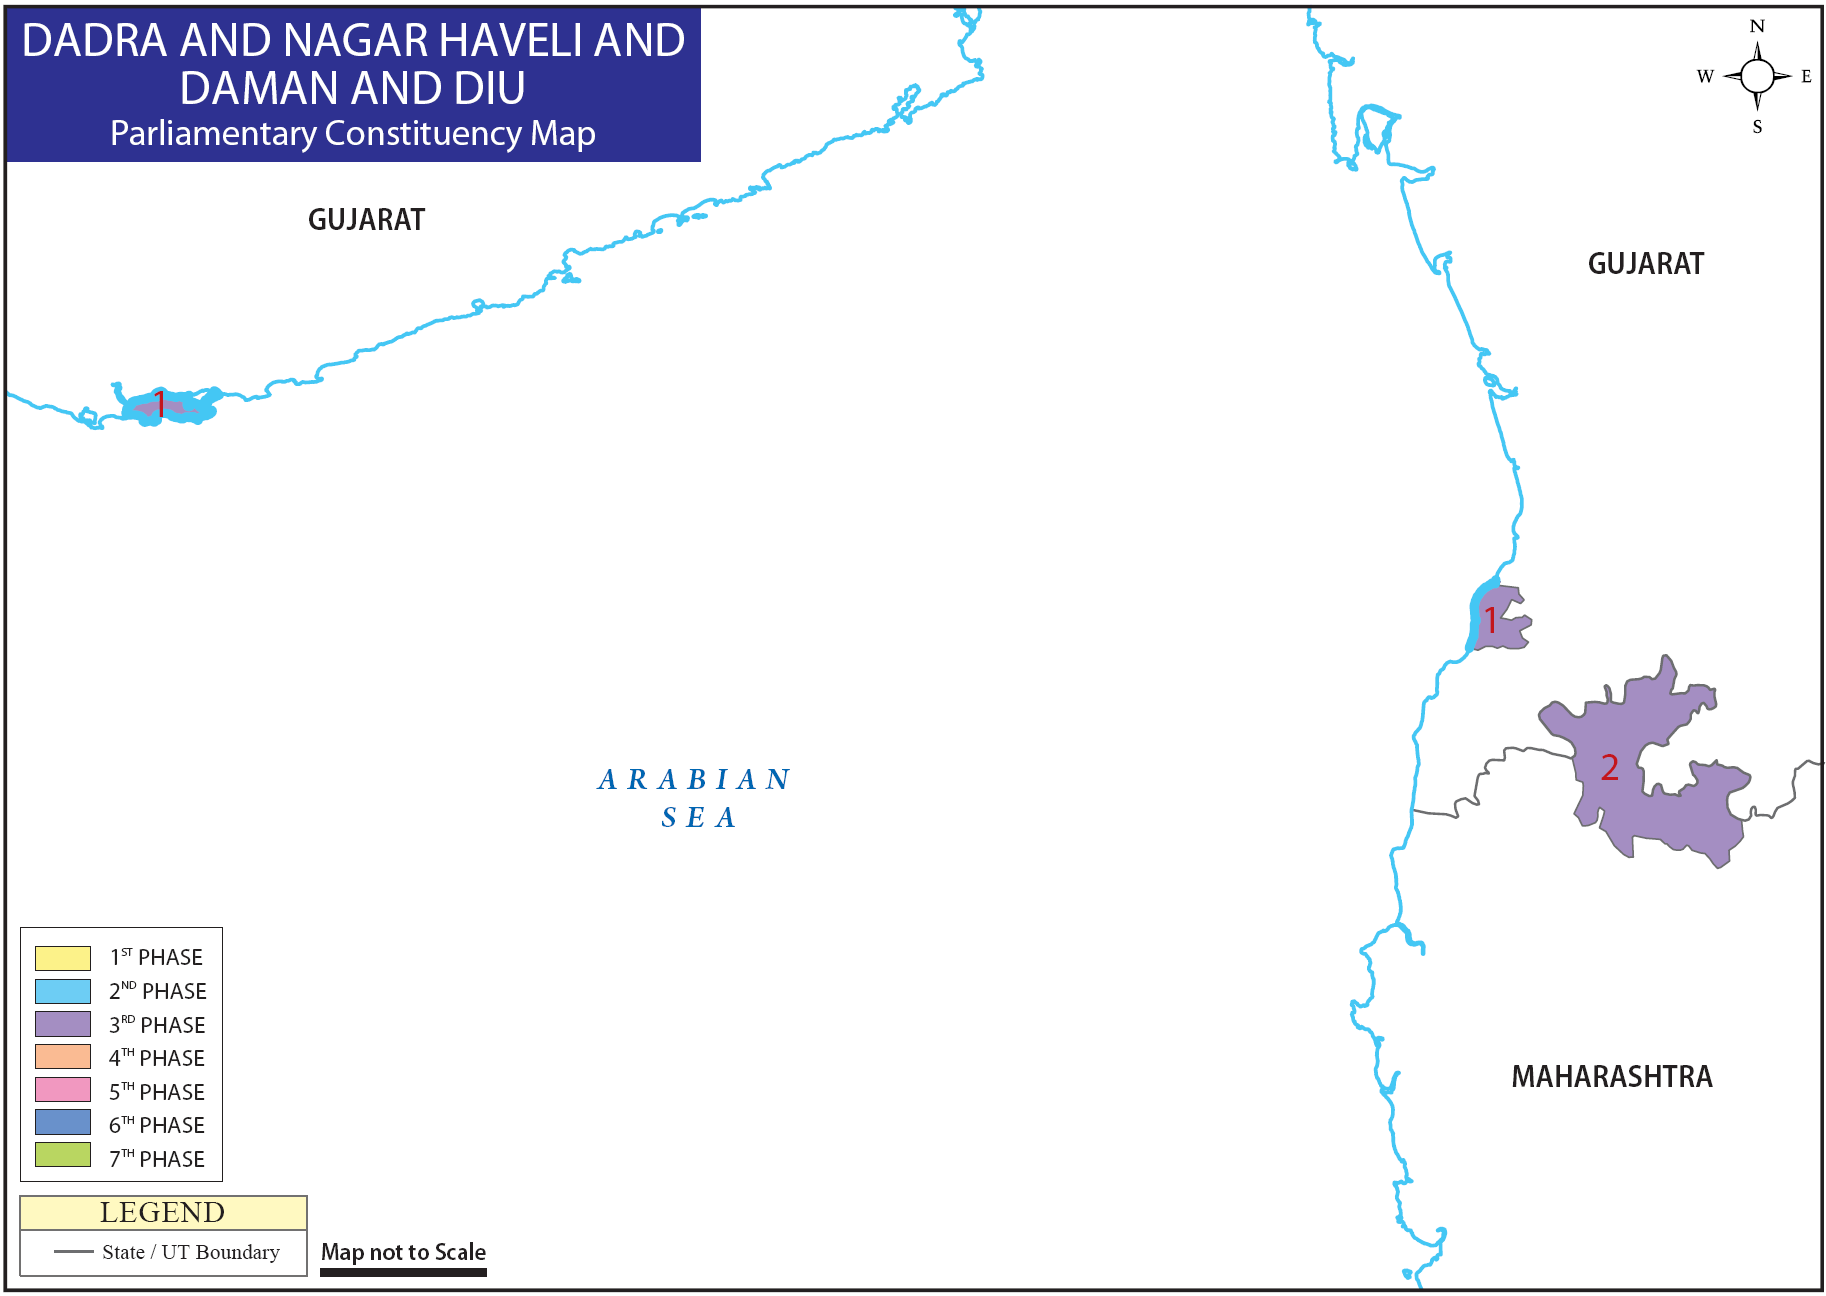 Daman and Diu Parliamentary Constituency Map